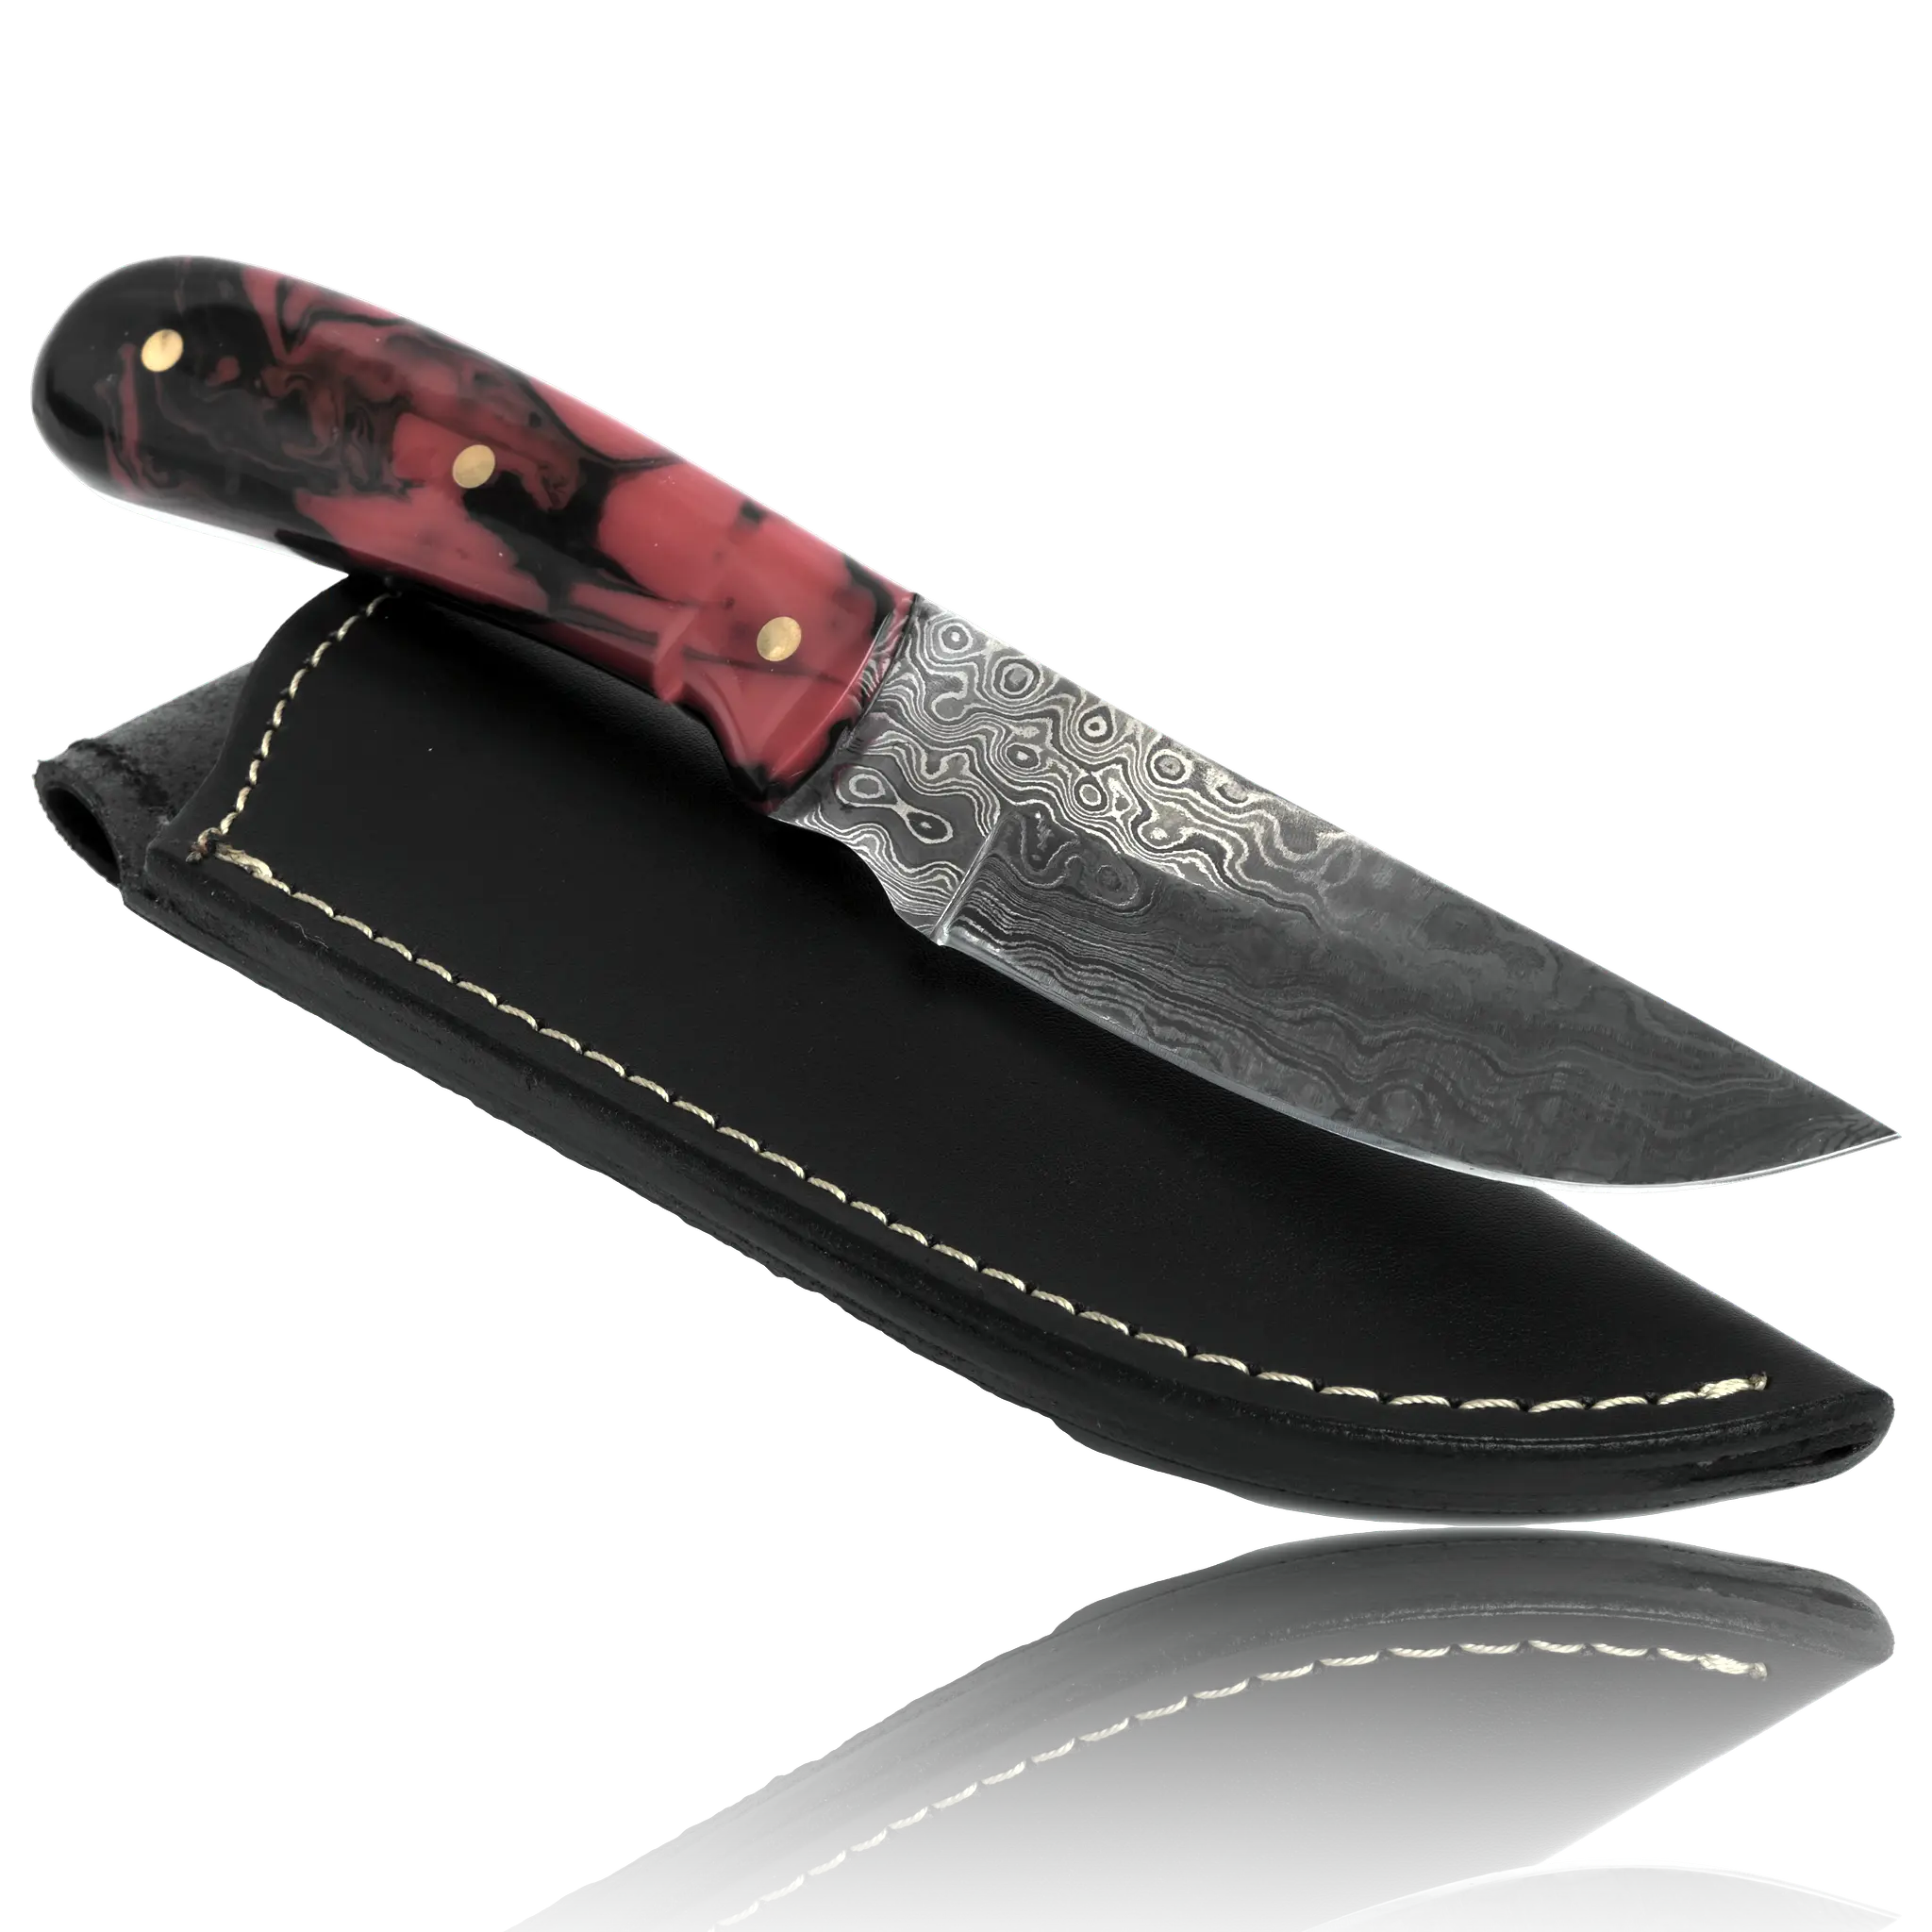 YUMA Damascus Steel Skinner Knife 5 inch blade with Original Cow leather sheath